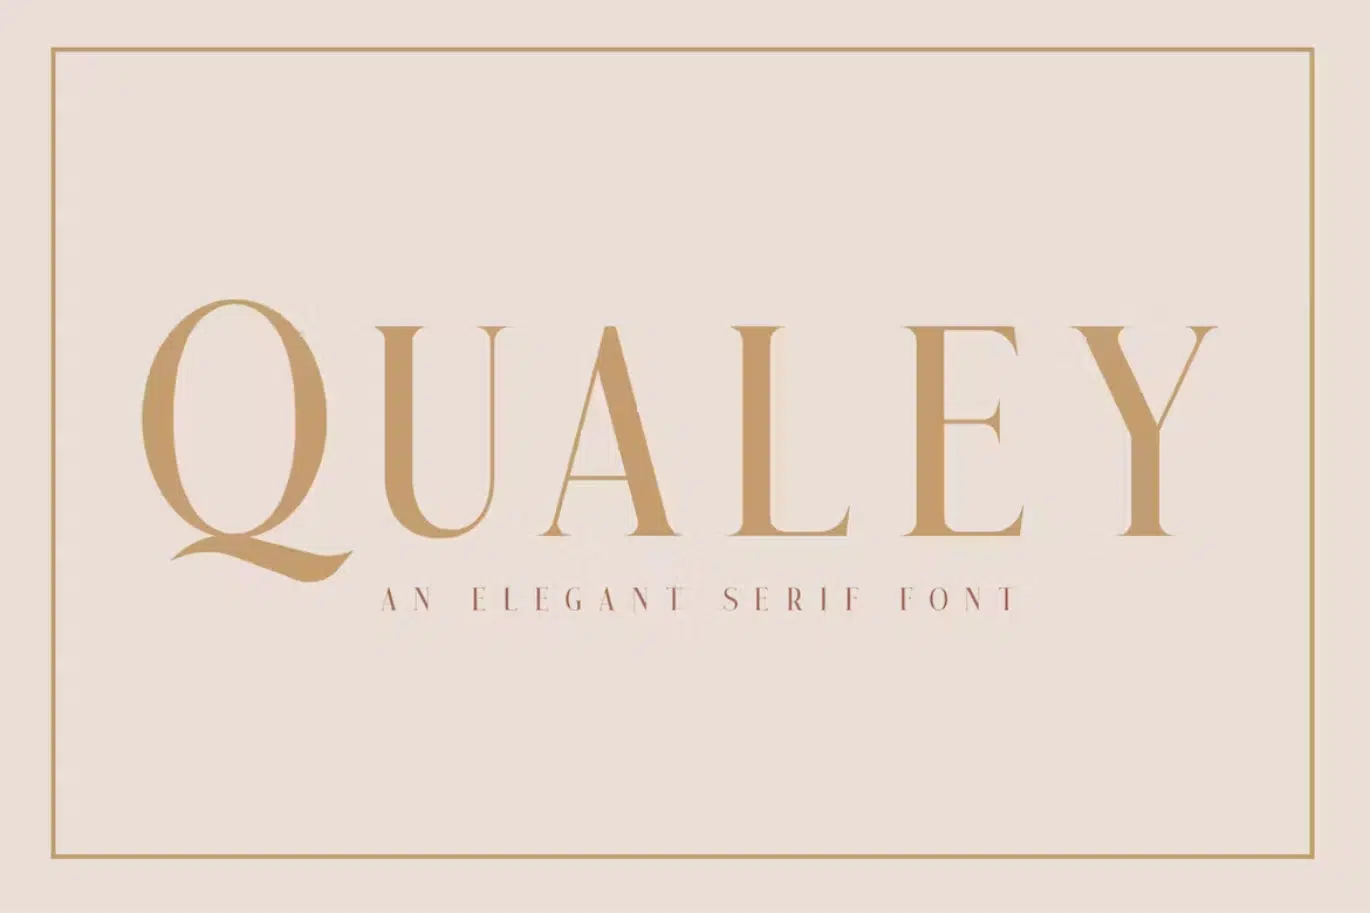 Qualey Font Similar To Didot